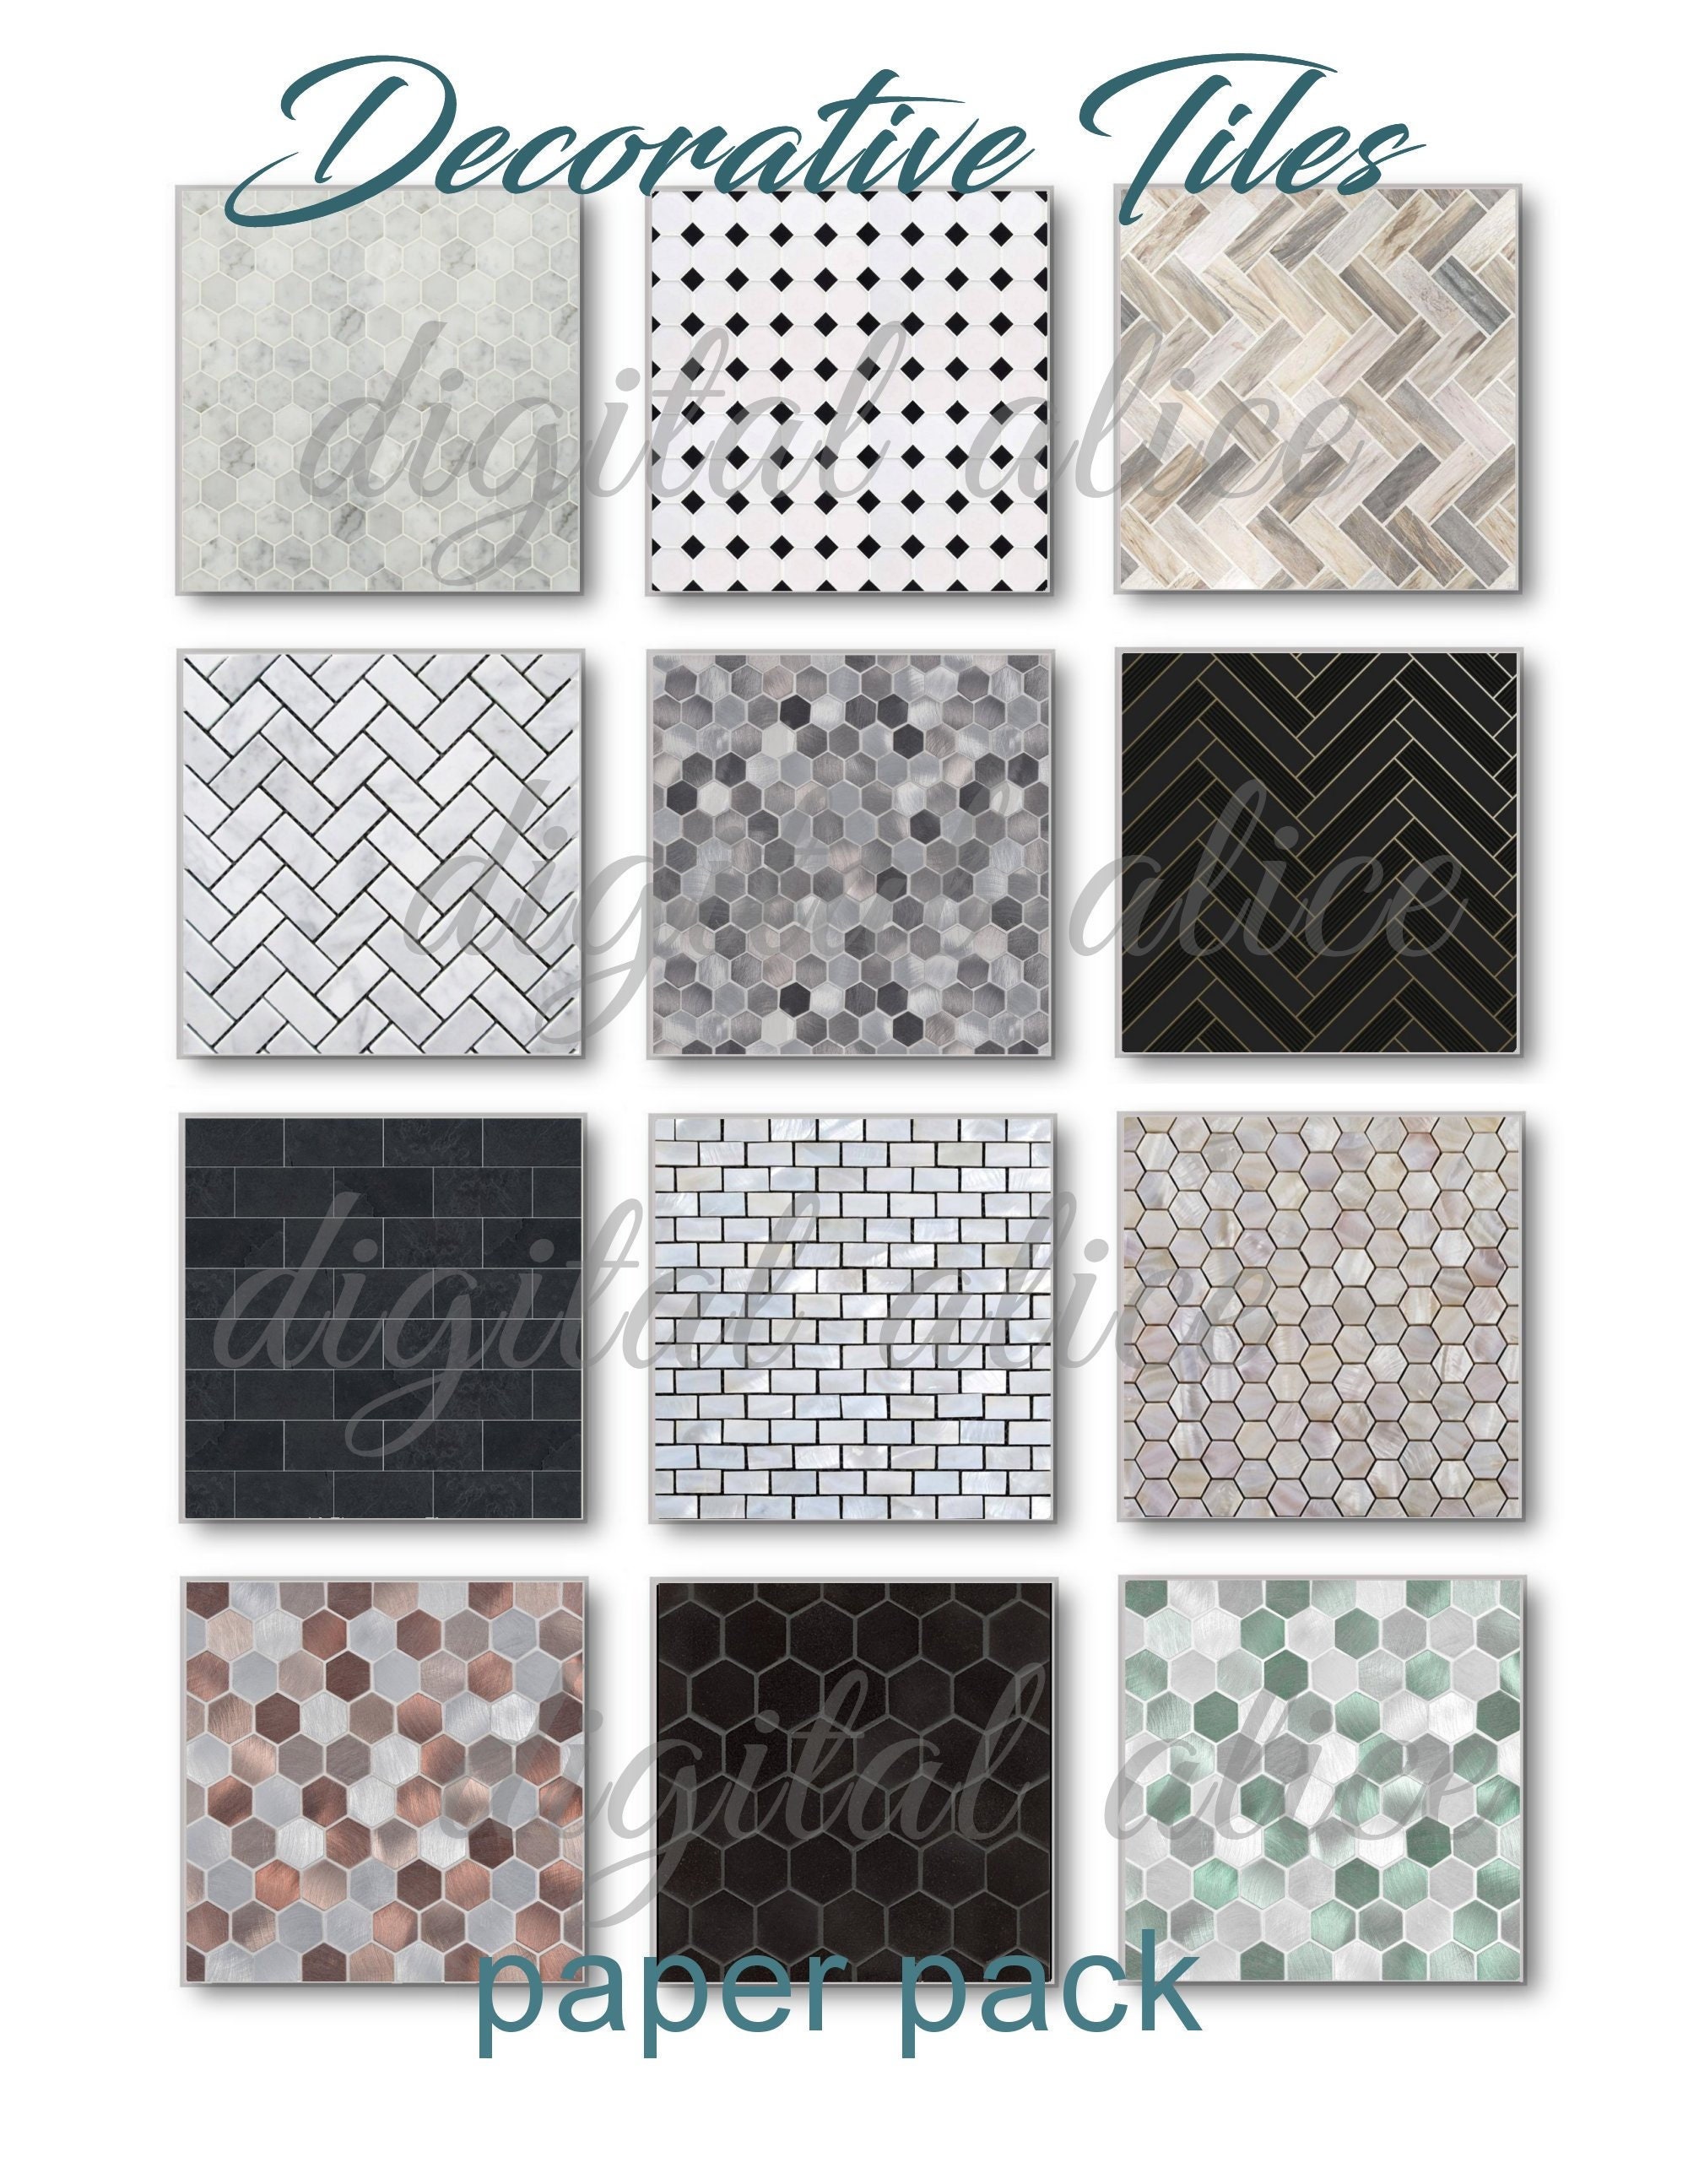 Decorative tiles printable for sale  